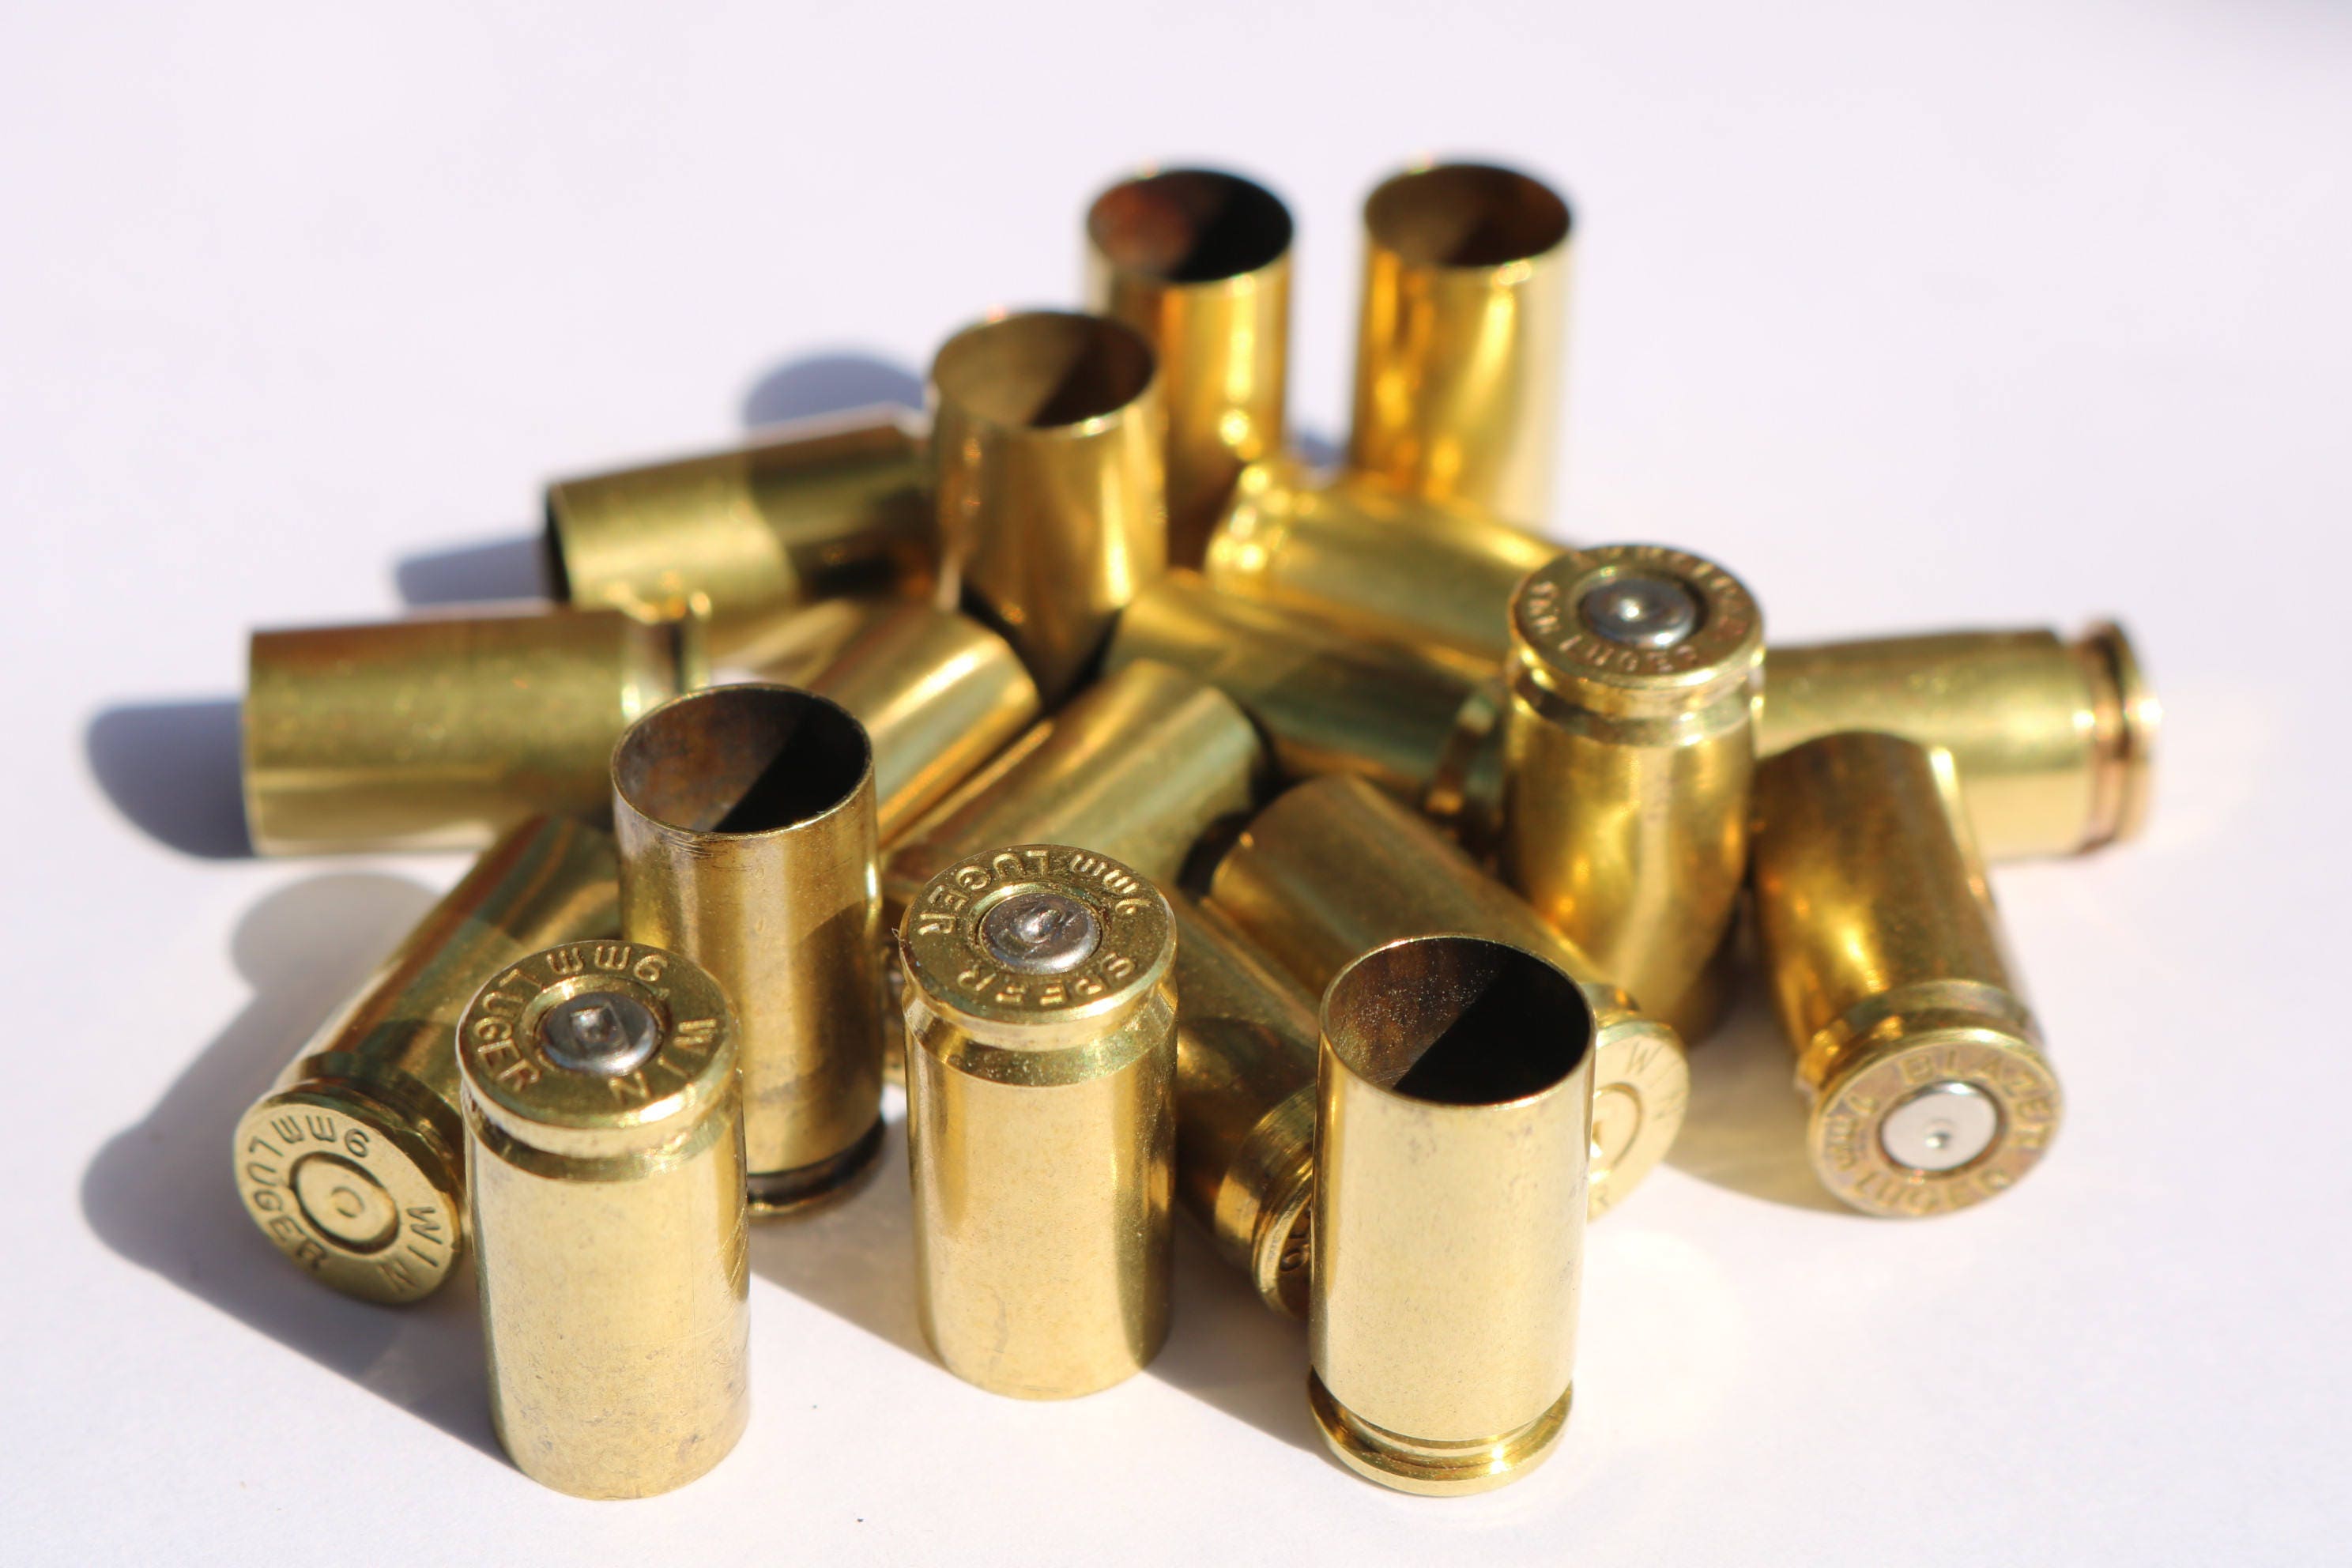 9mm brass bullets